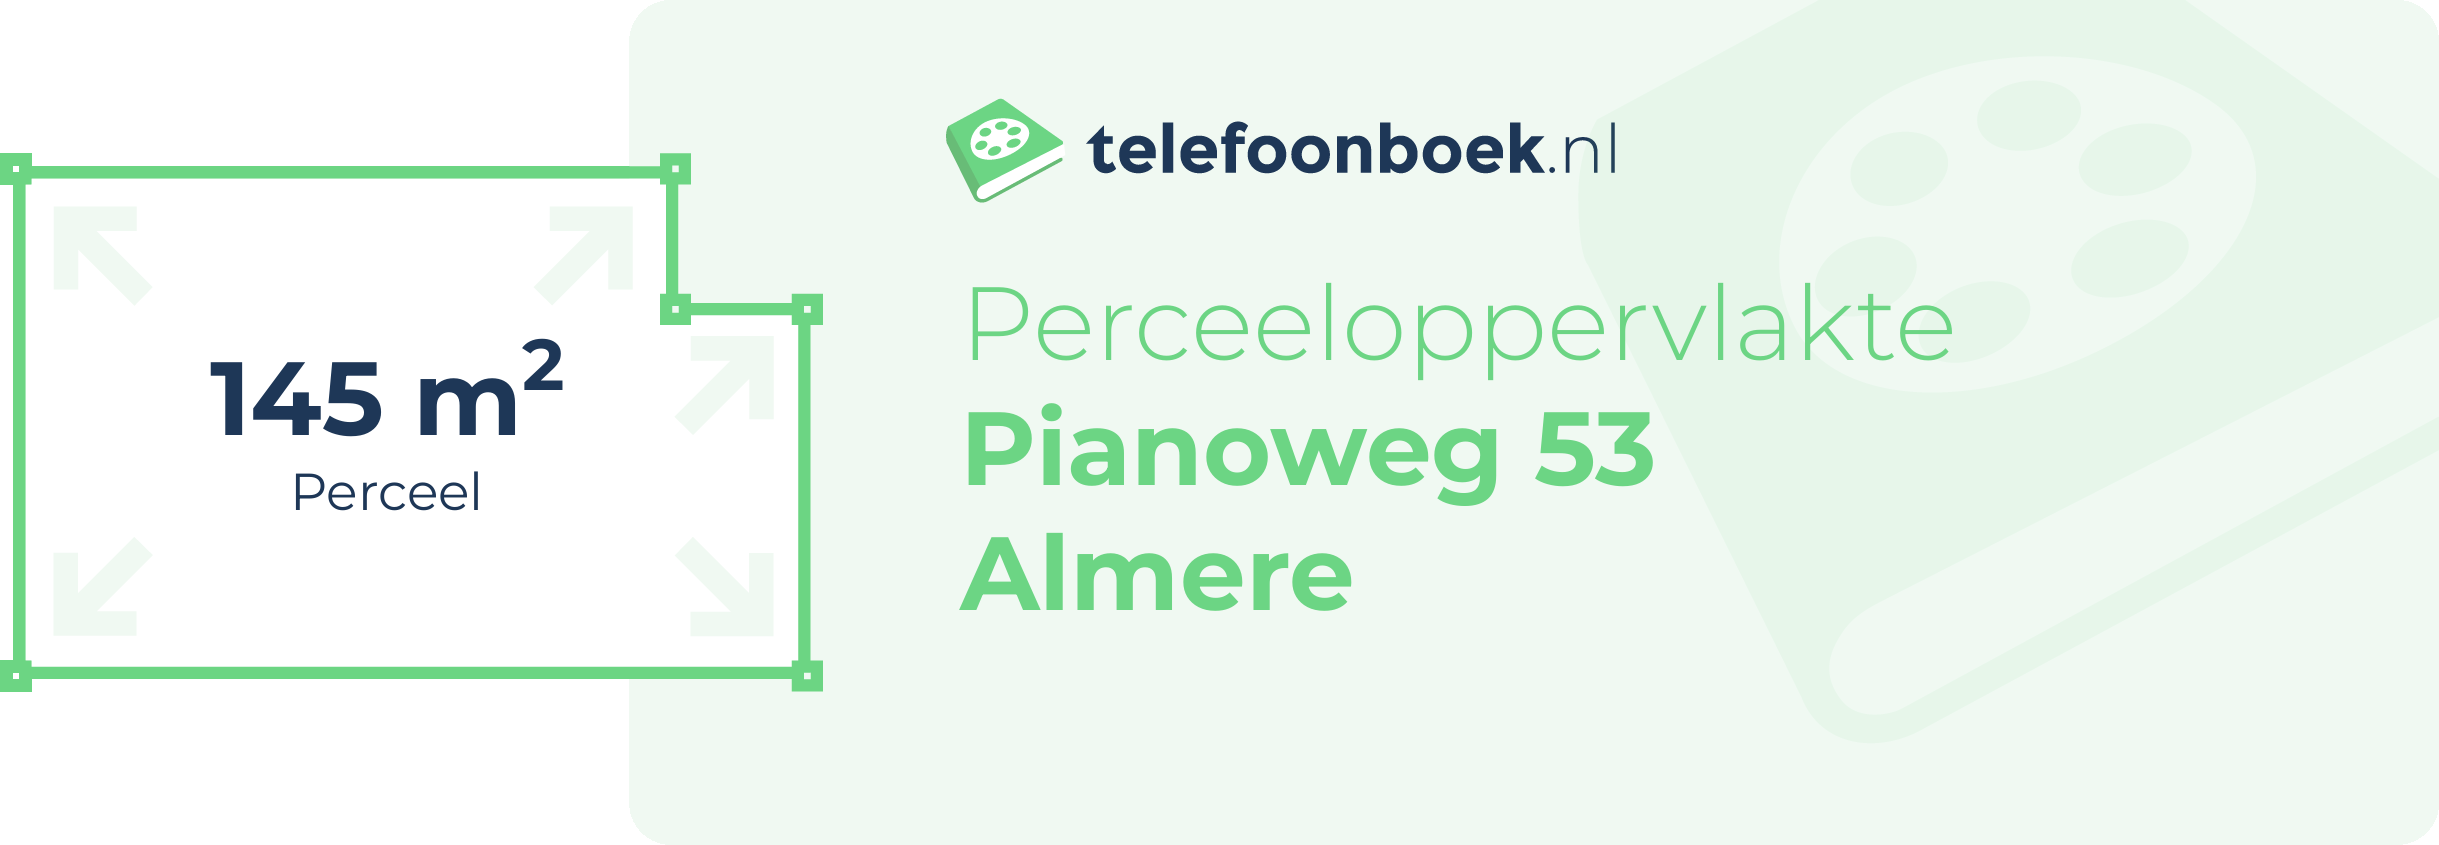 Perceeloppervlakte Pianoweg 53 Almere